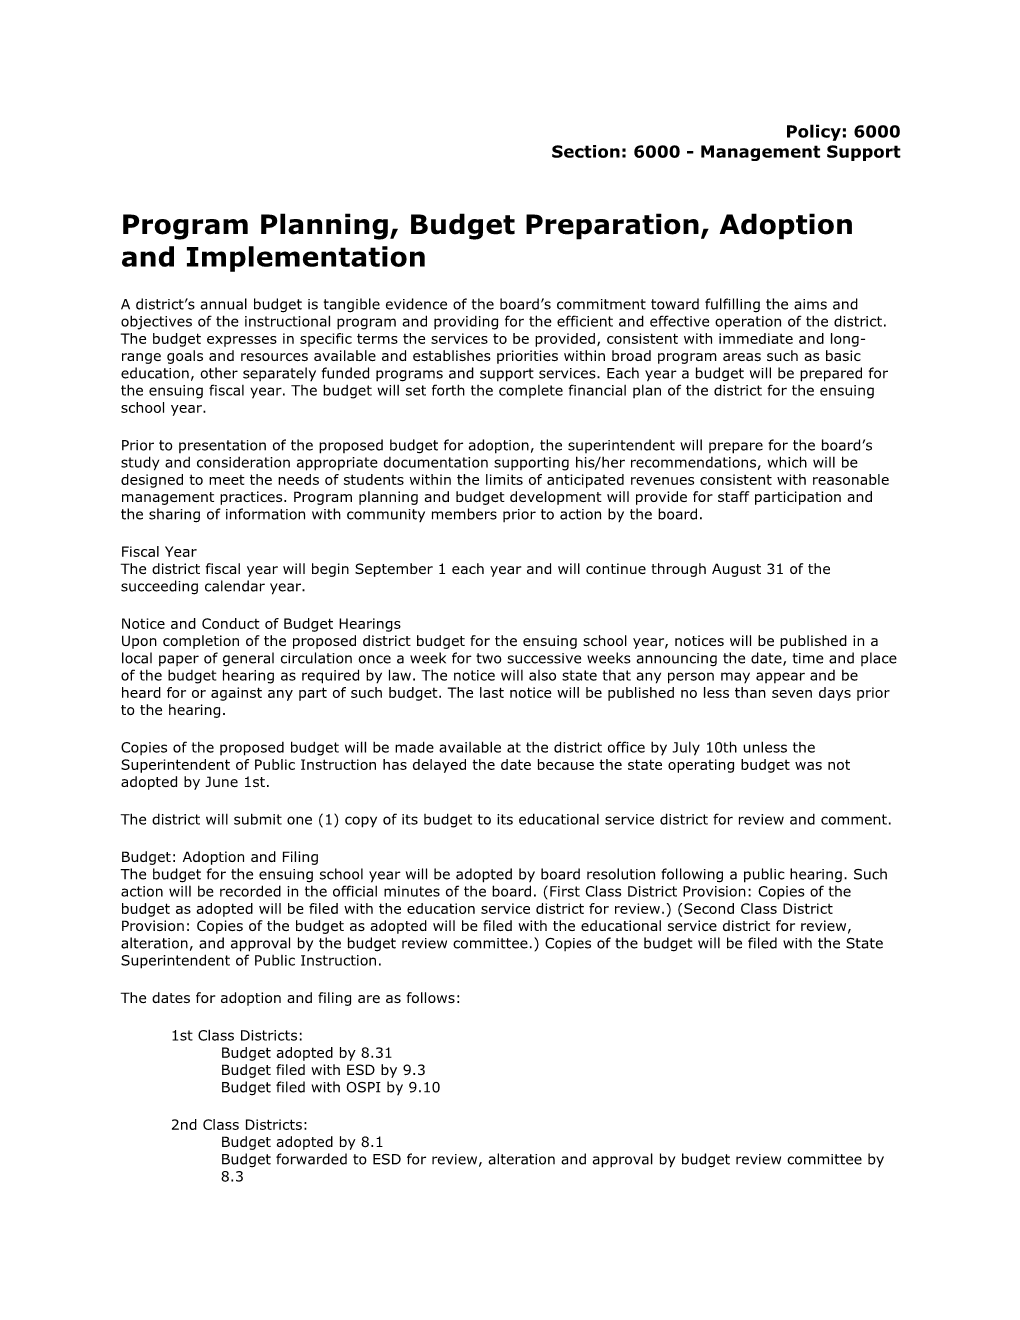 Program Planning, Budget Preparation, Adoption and Implementation